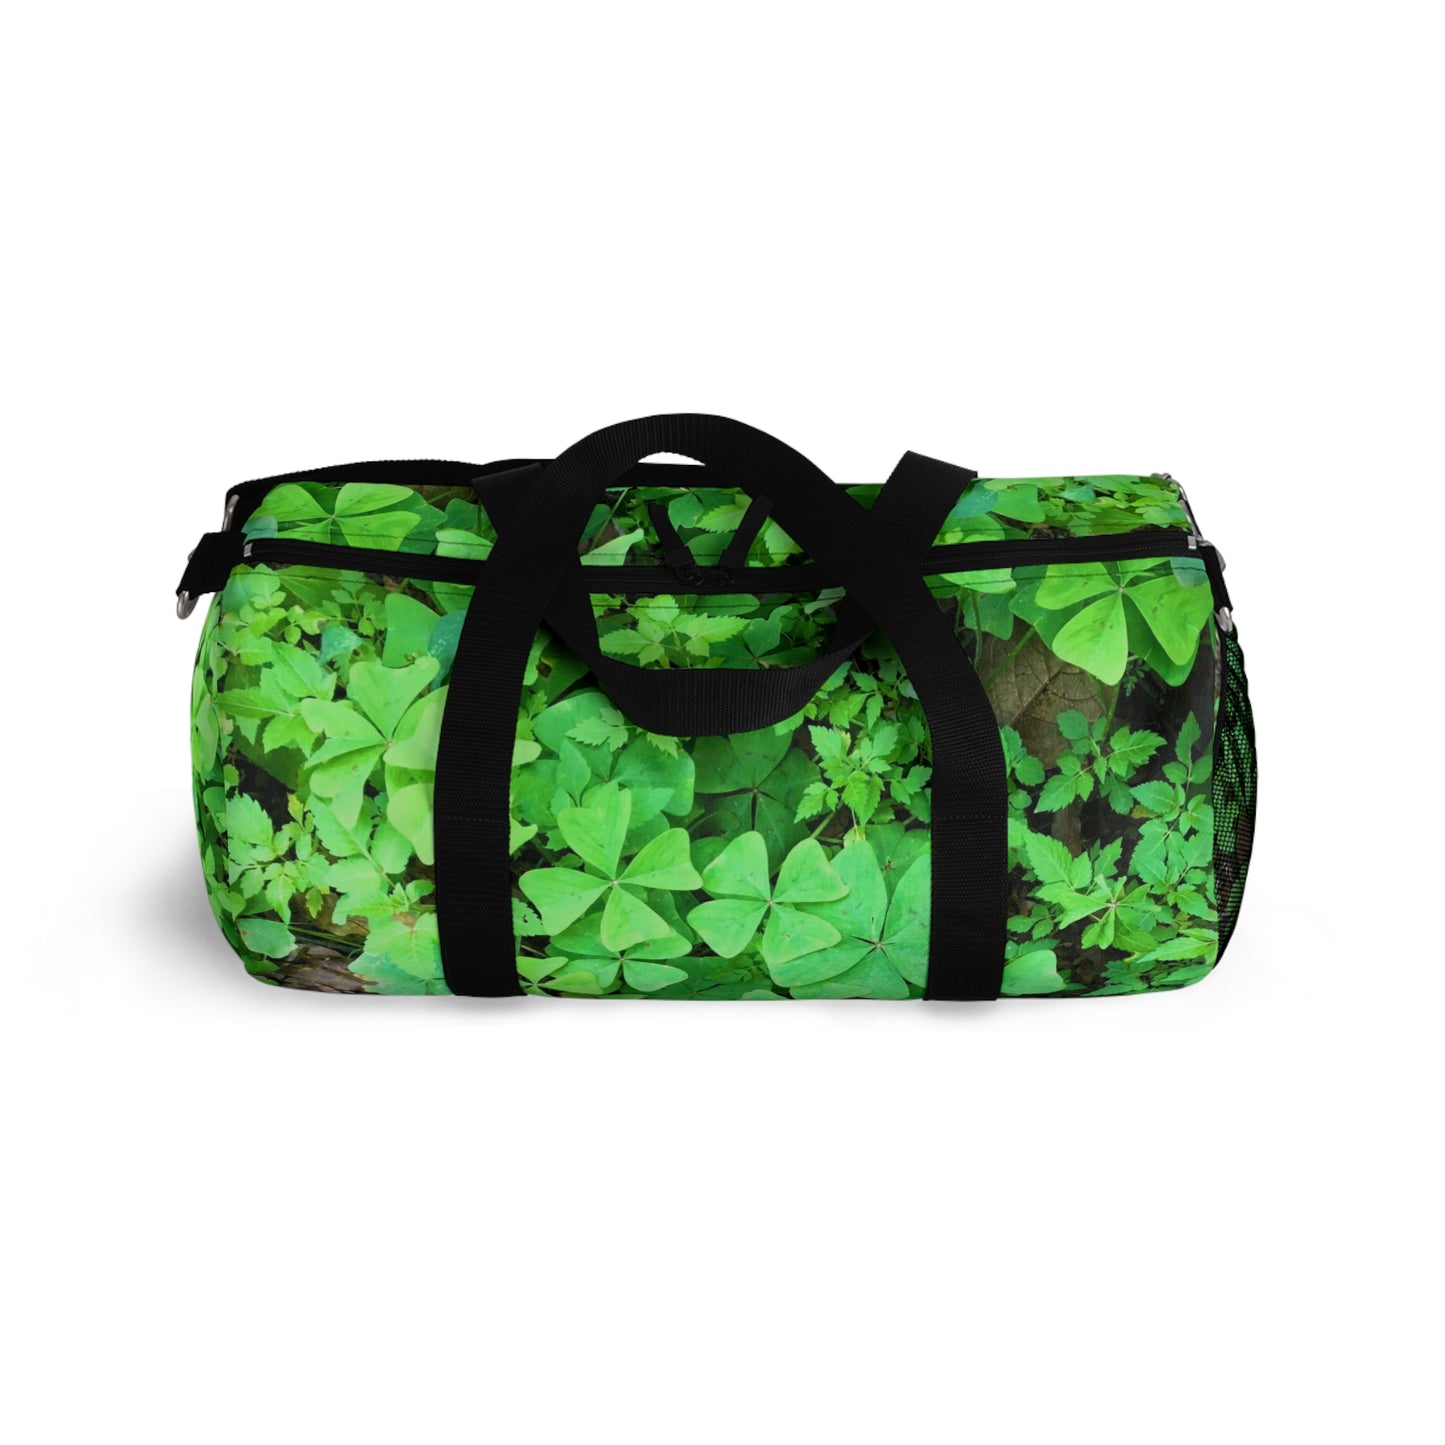 The Good Luck Weekender Duffel Bag 🍀